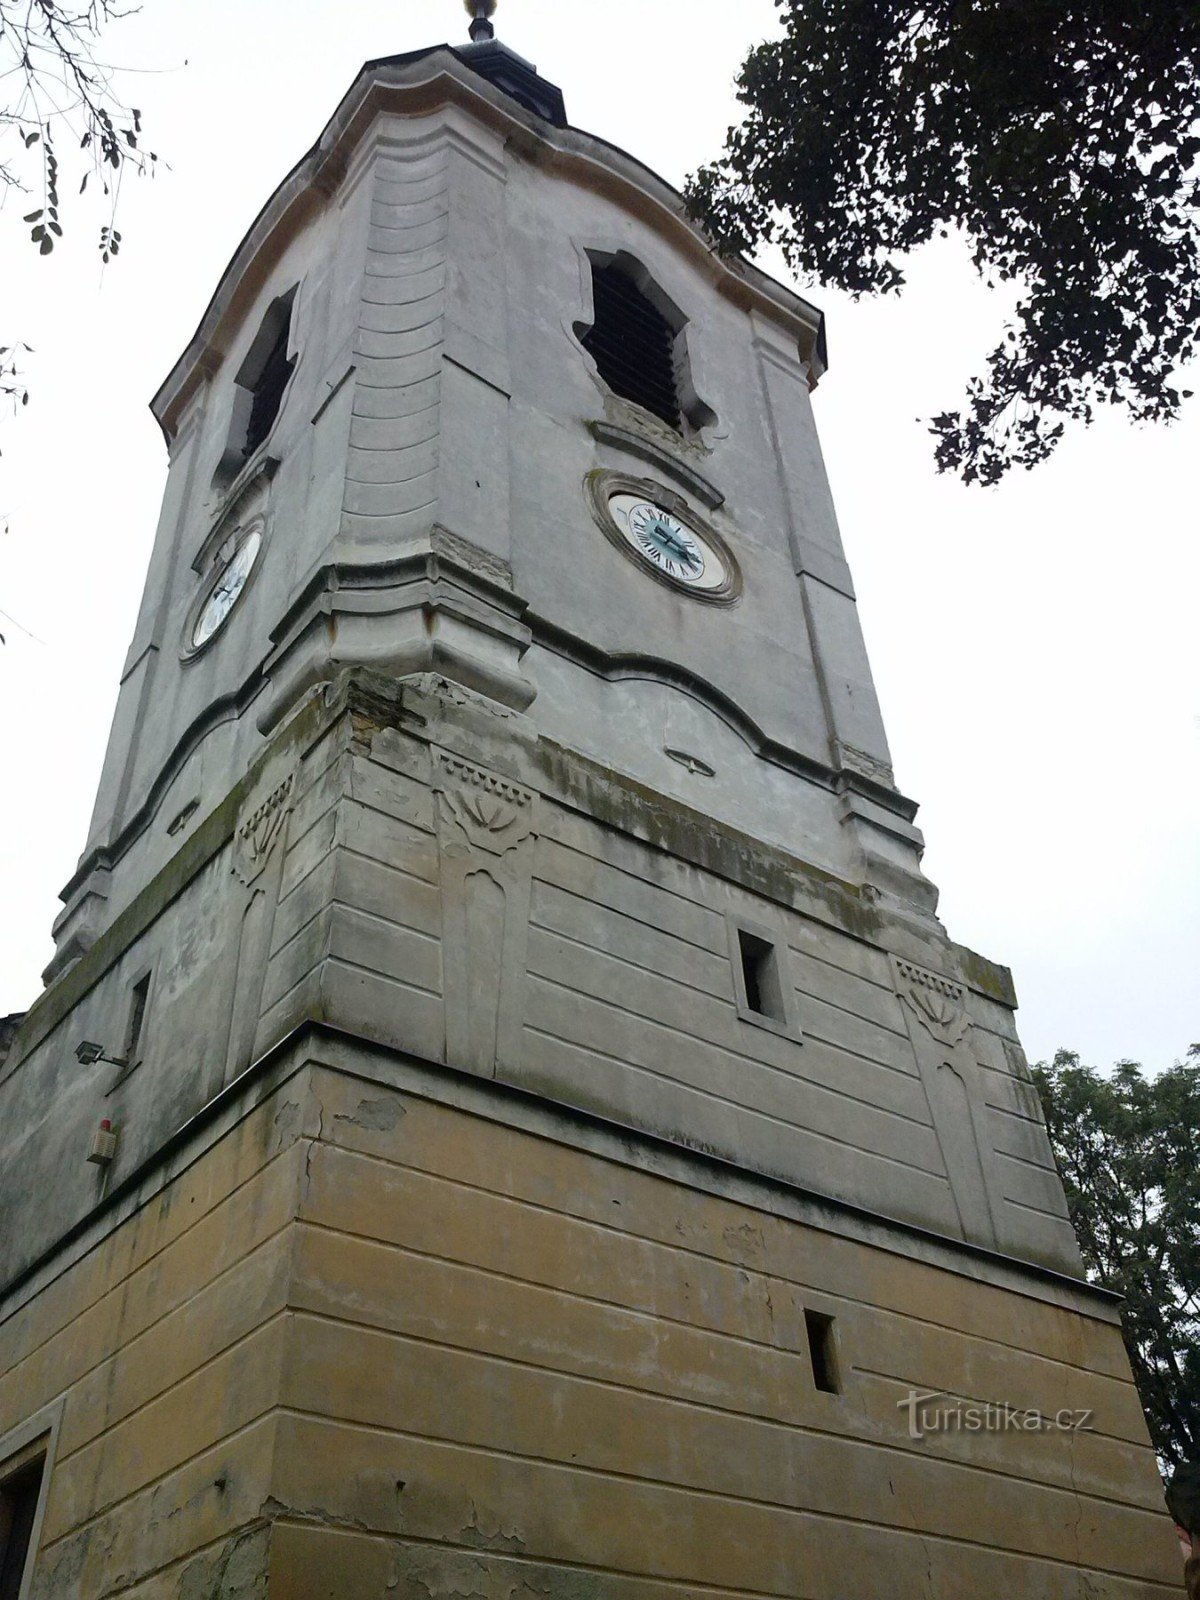 2. Torre de la iglesia